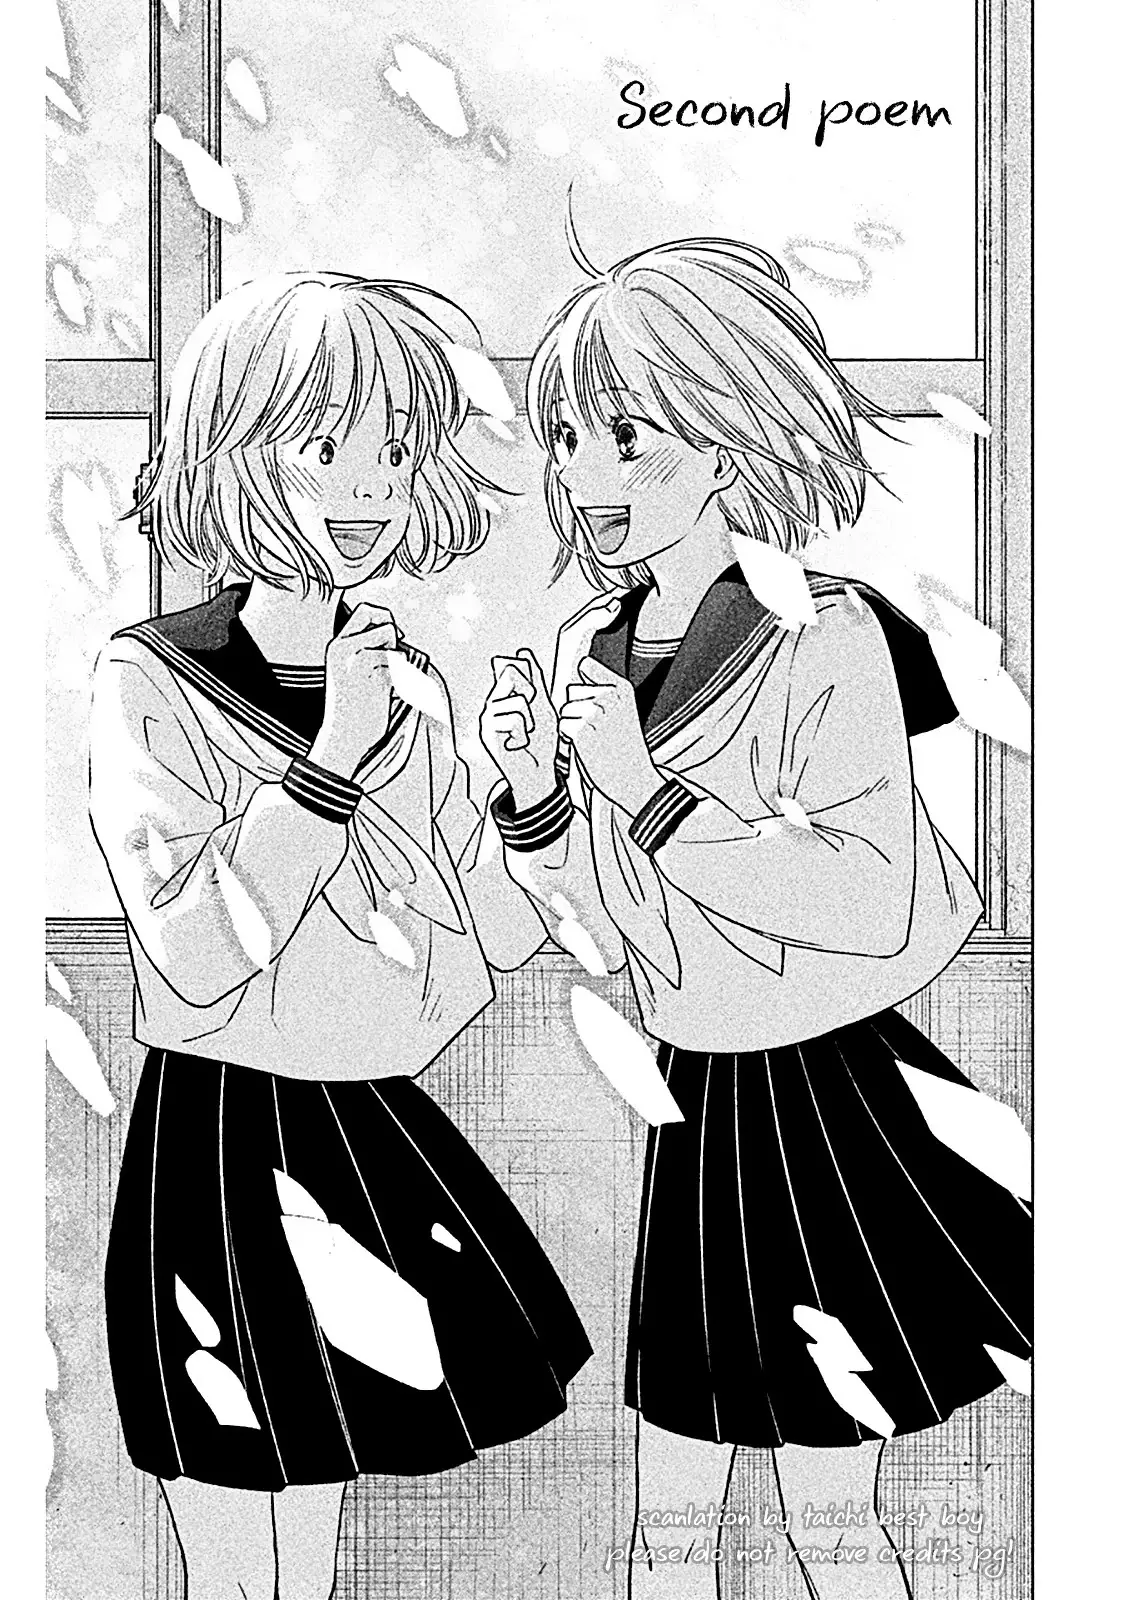 Chihayafuru: Middle School Arc - 2 page 2